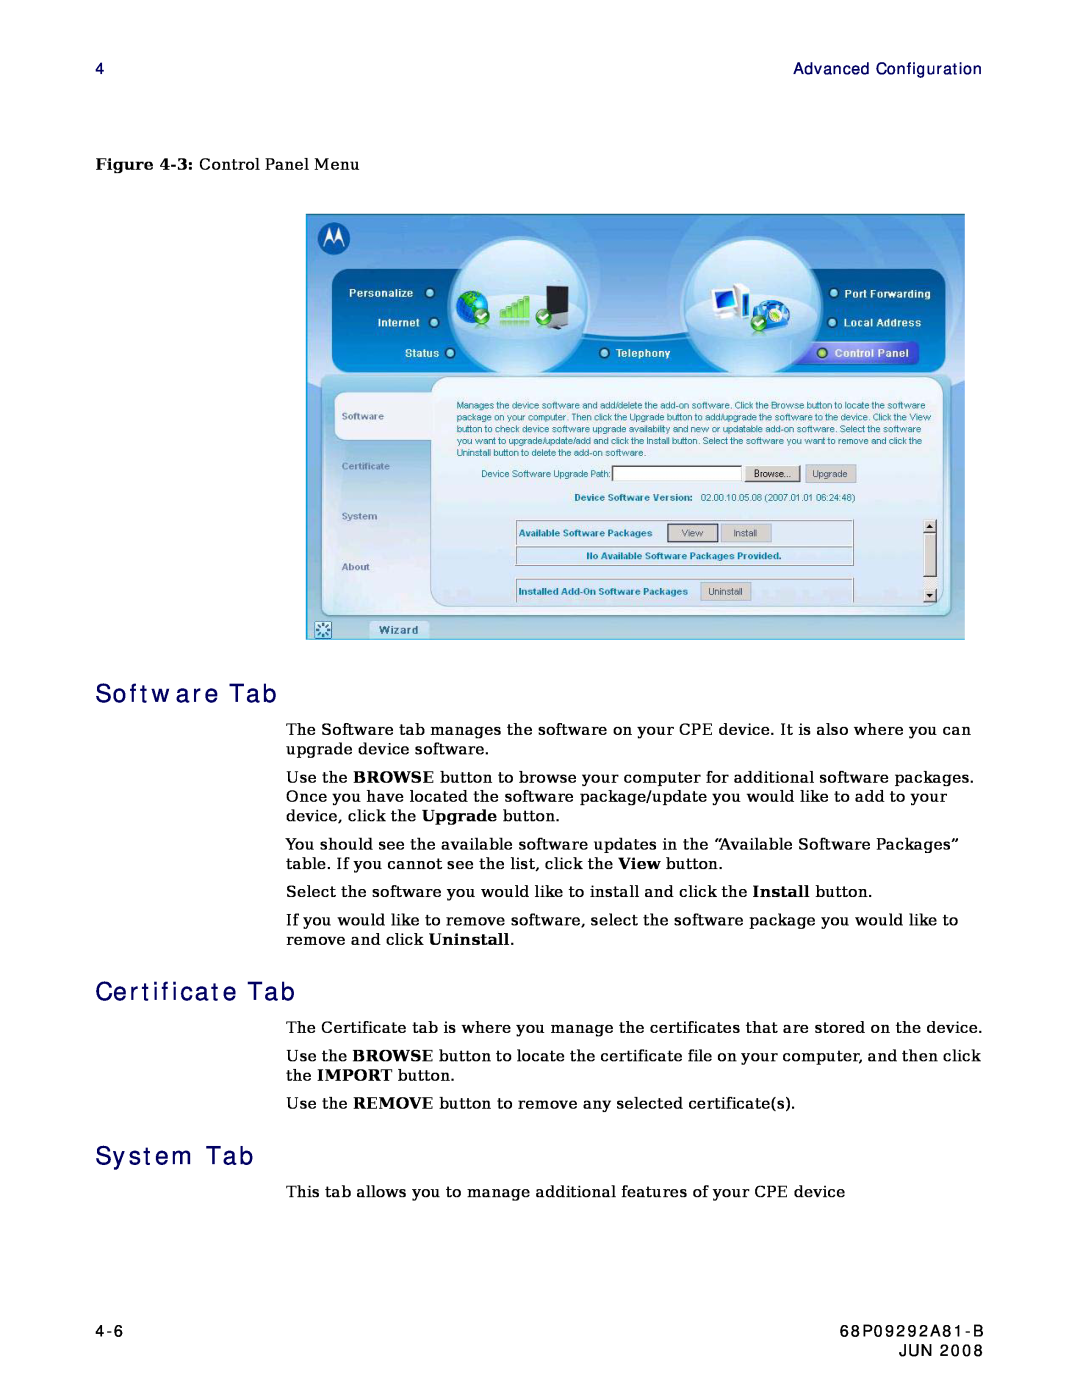 Motorola CPEI 750 manual Software Tab, Certificate Tab, System Tab, 68P09292A81-B 